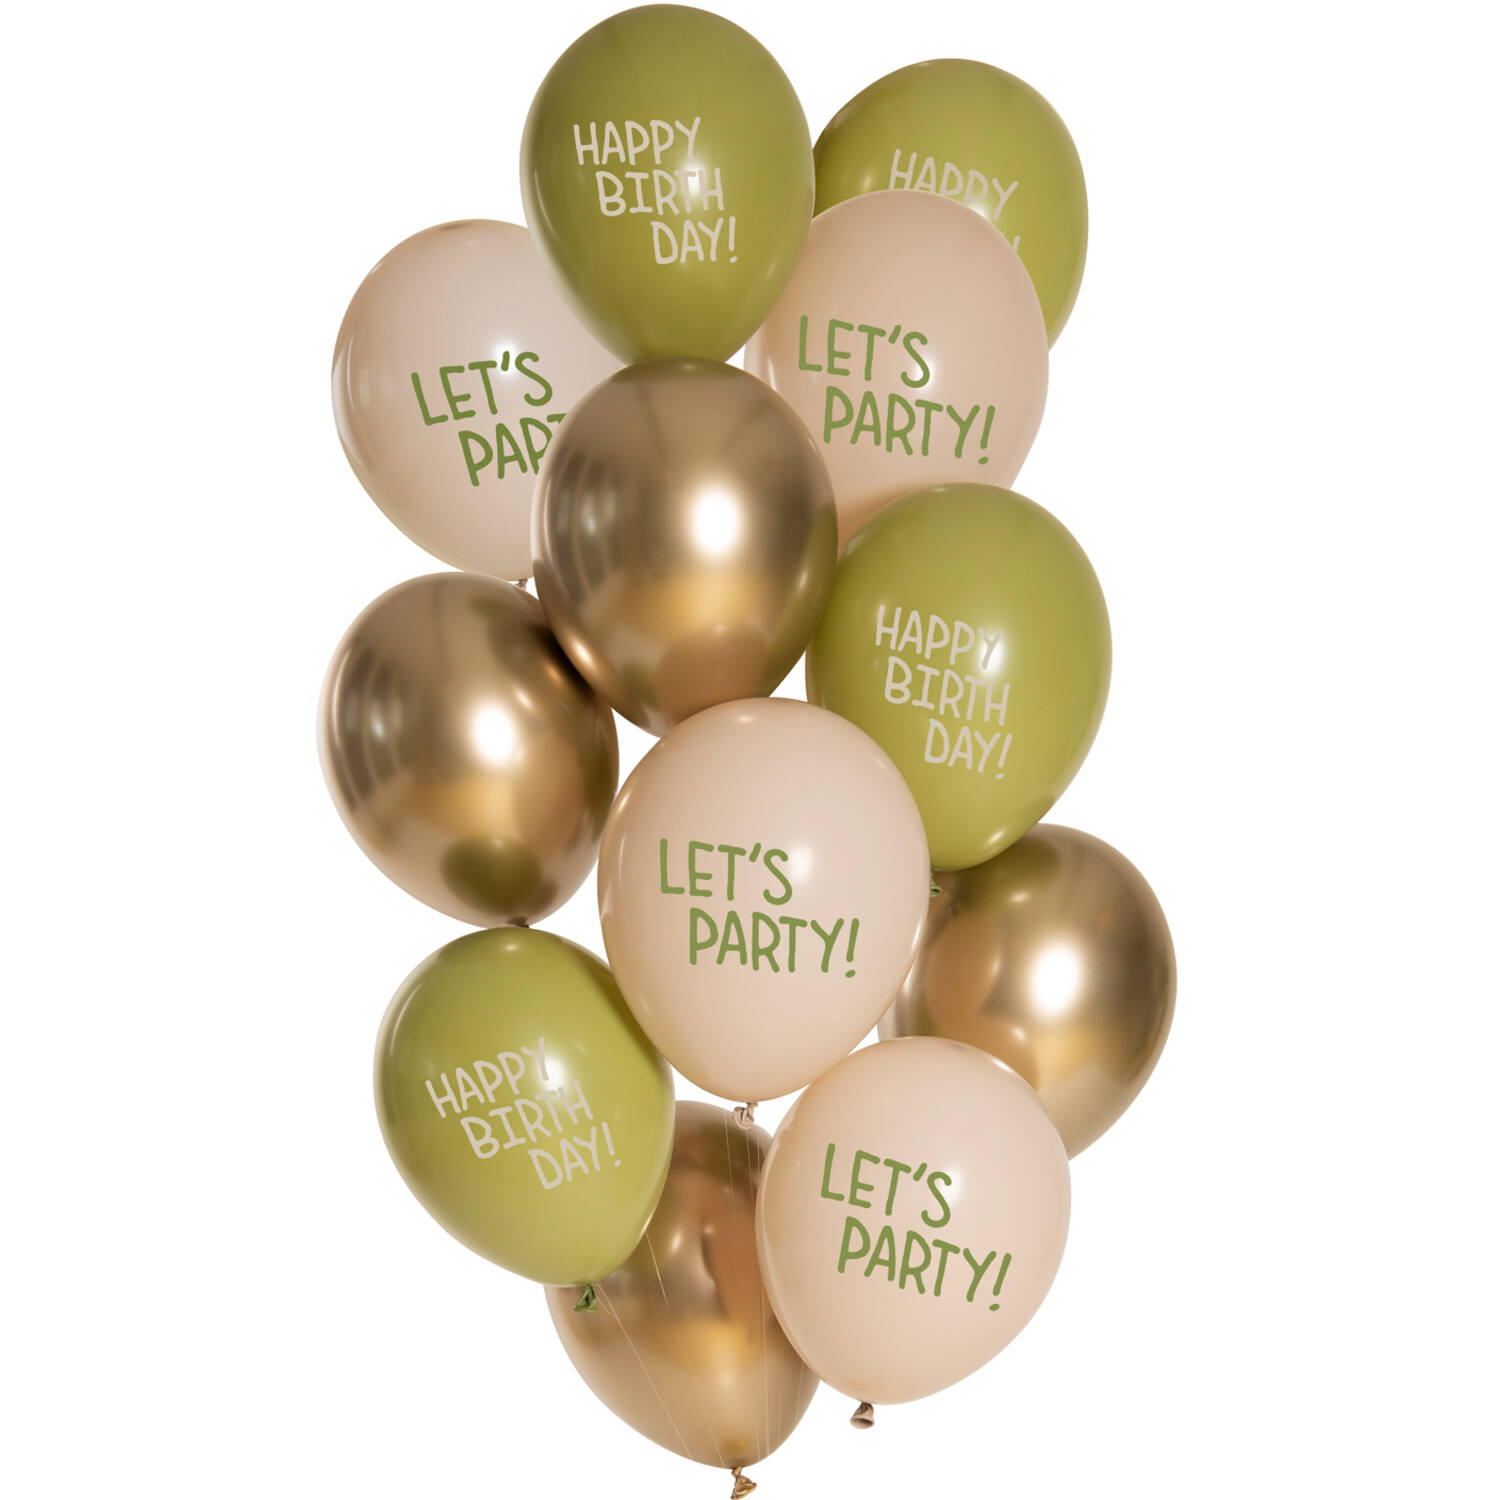 NEU Premium-Latex-Luftballons Happy Birthday, Let's Party, Golden Olive, 33cm, 12 Stk.